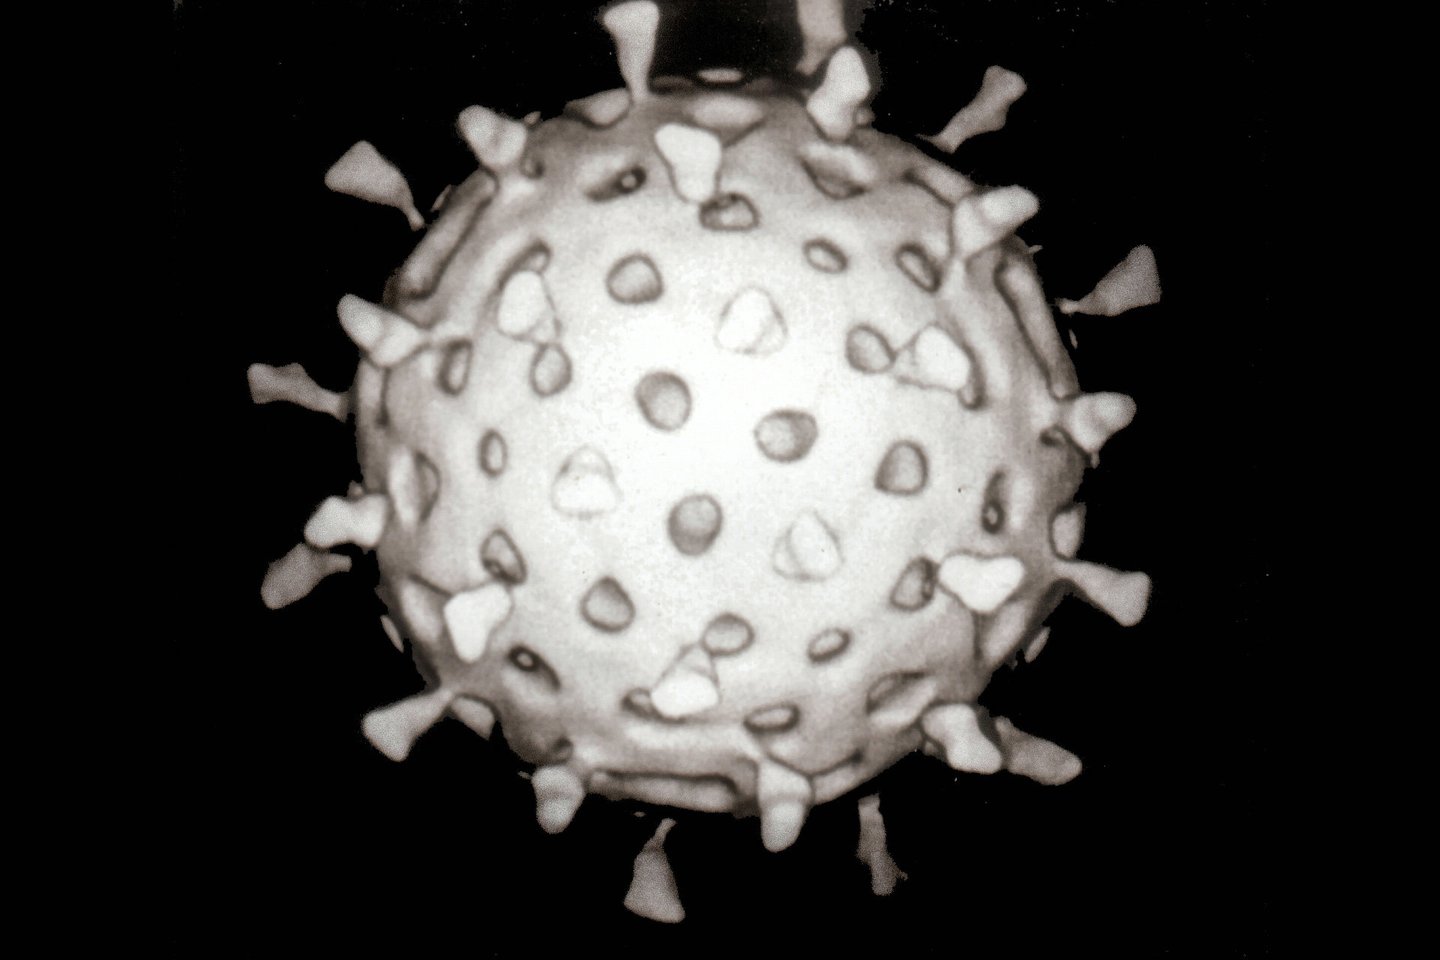  Kompiuterin4 rotaviruso rekonstrukcija, sukurta pagal kelias elektronines mikrofotografijas.<br> Wikimedia commons